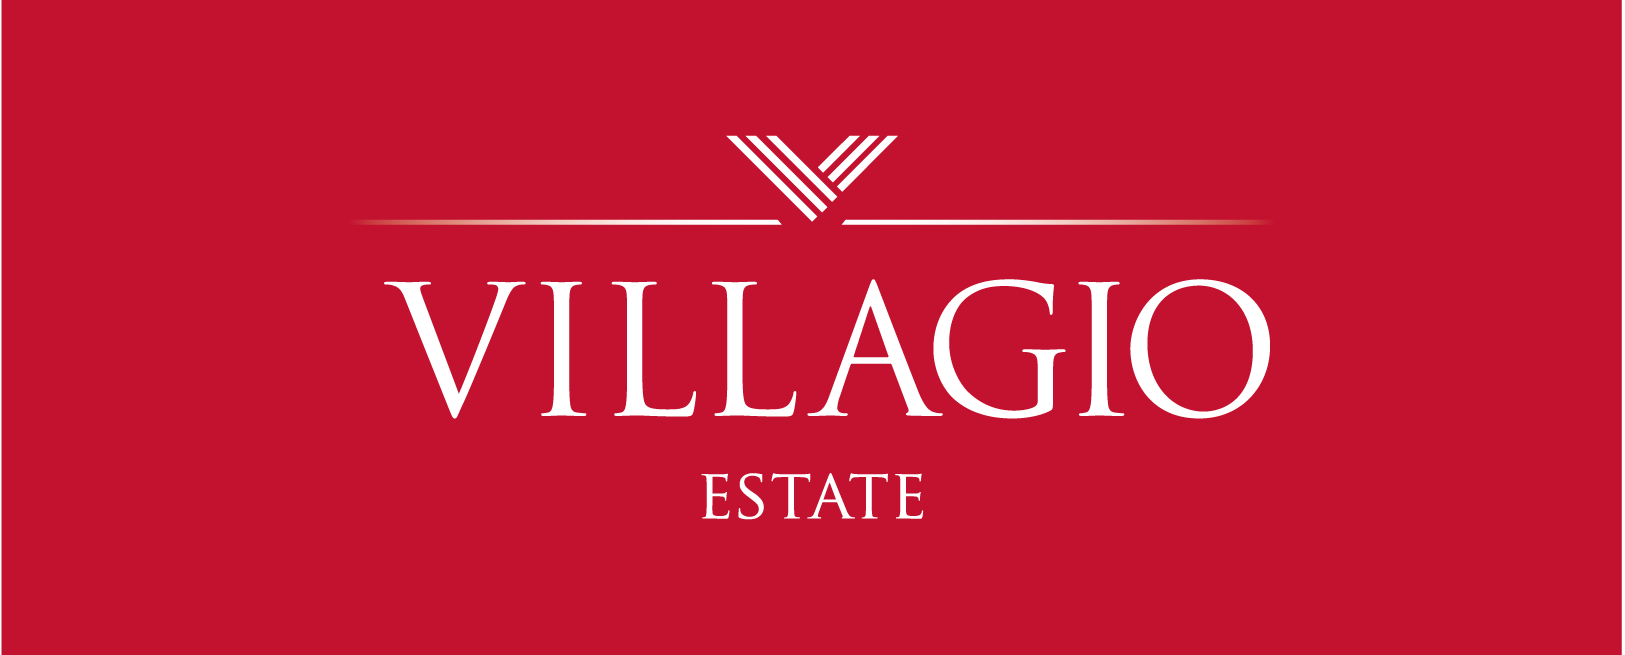 Realty москва. Villagio Estate. Villagio Estate логотип. Villagio Estate офис продаж. Вилладжио Эстейт коттеджный.